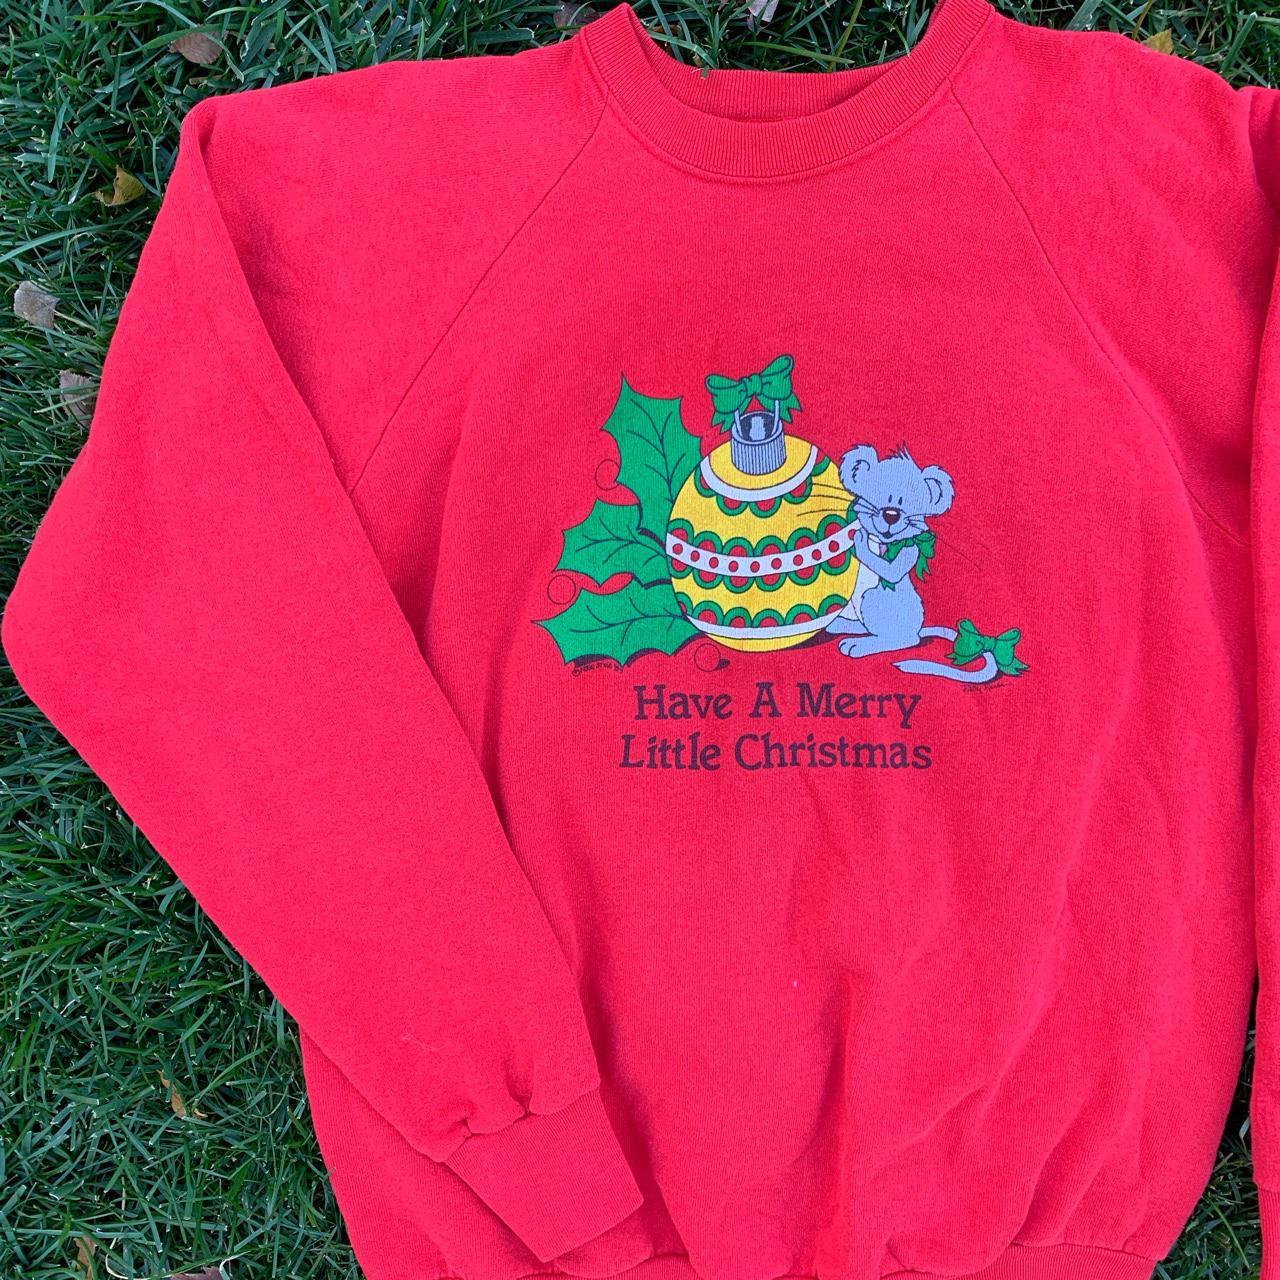 Product Image 1 - Vintage Christmas Sweatshirt

• great vintage